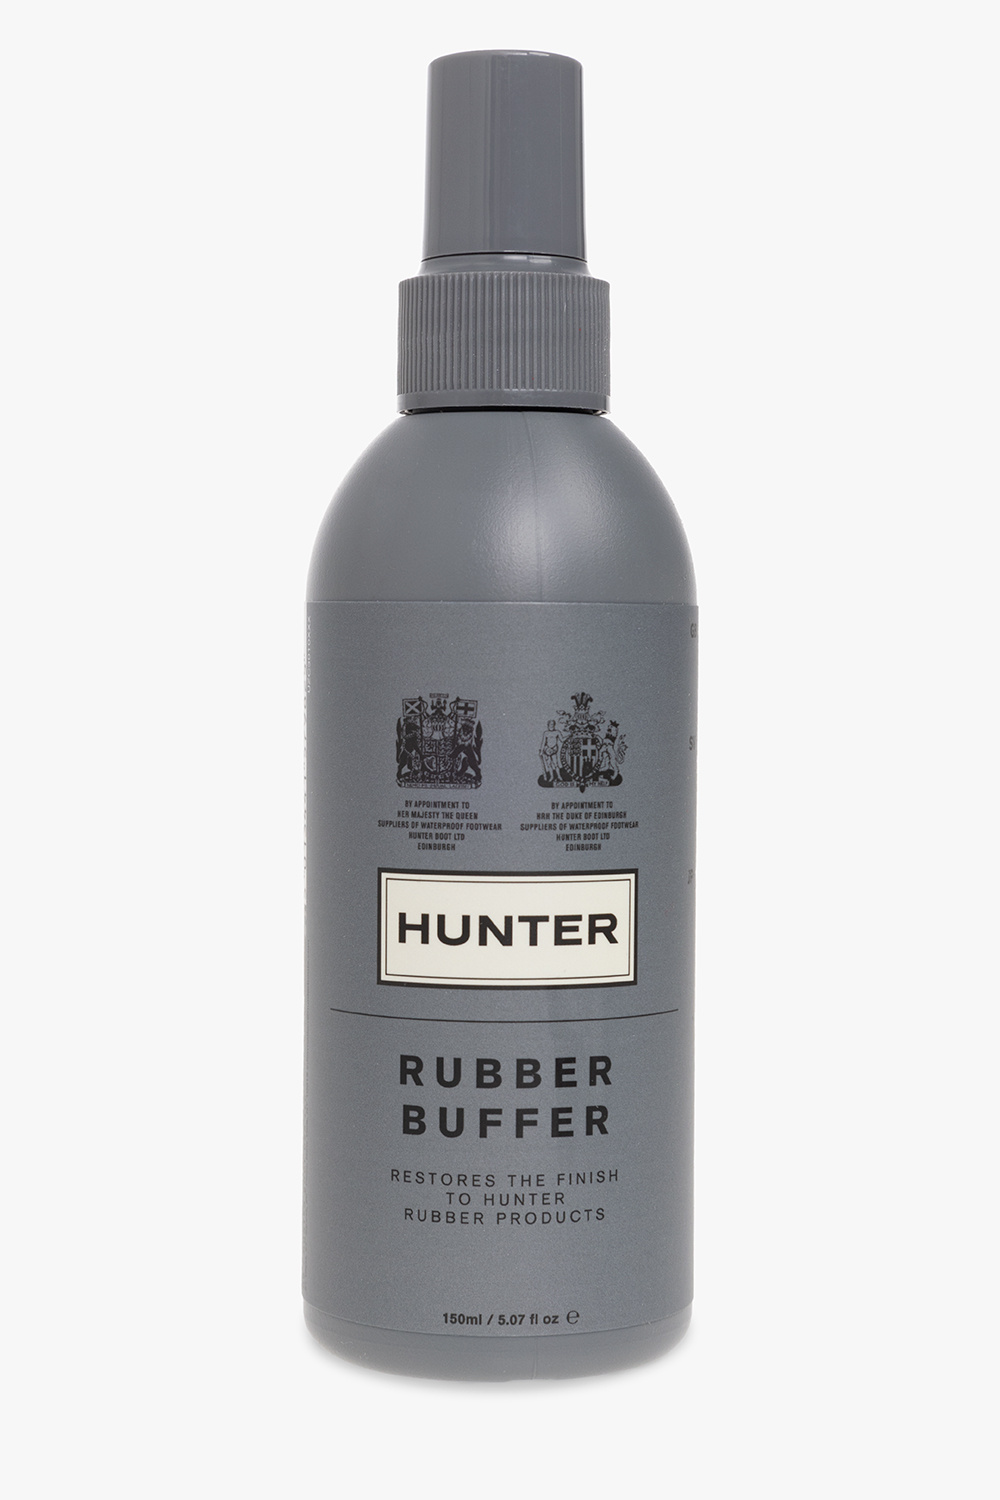 Hunter Rubber Hiking boot care kit